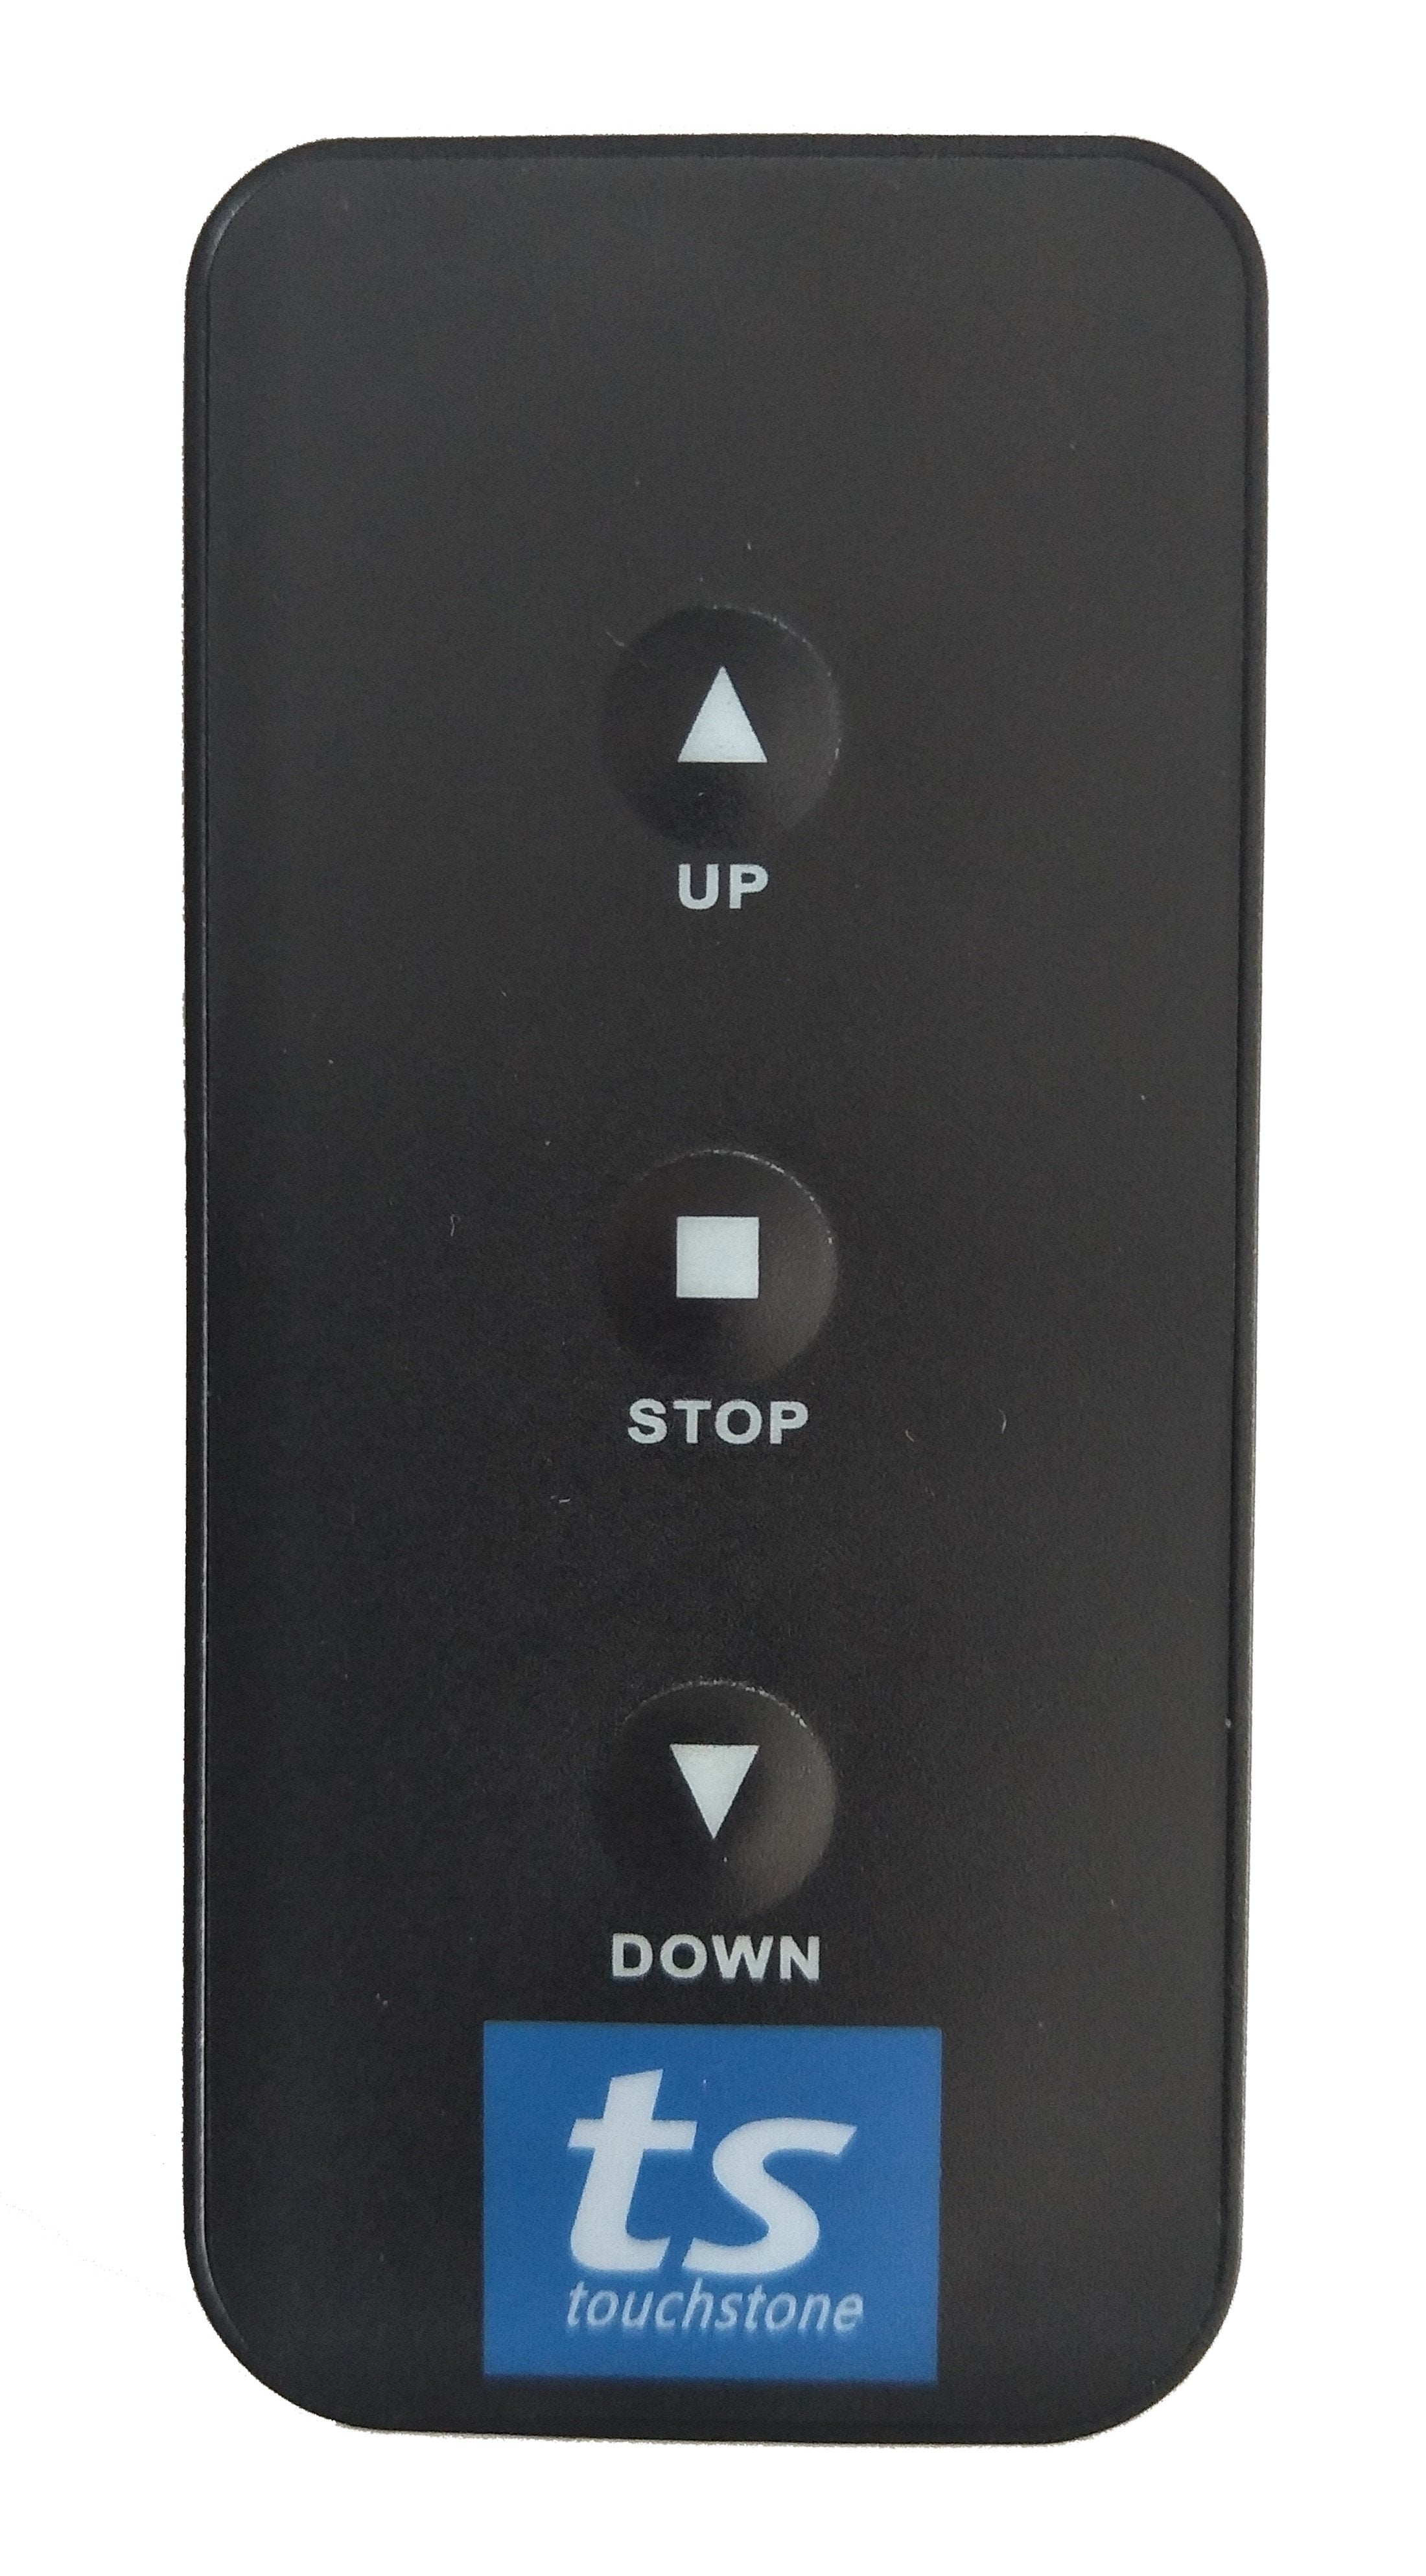 SRV 32800 Pro TV Lift Mechanism remote control.